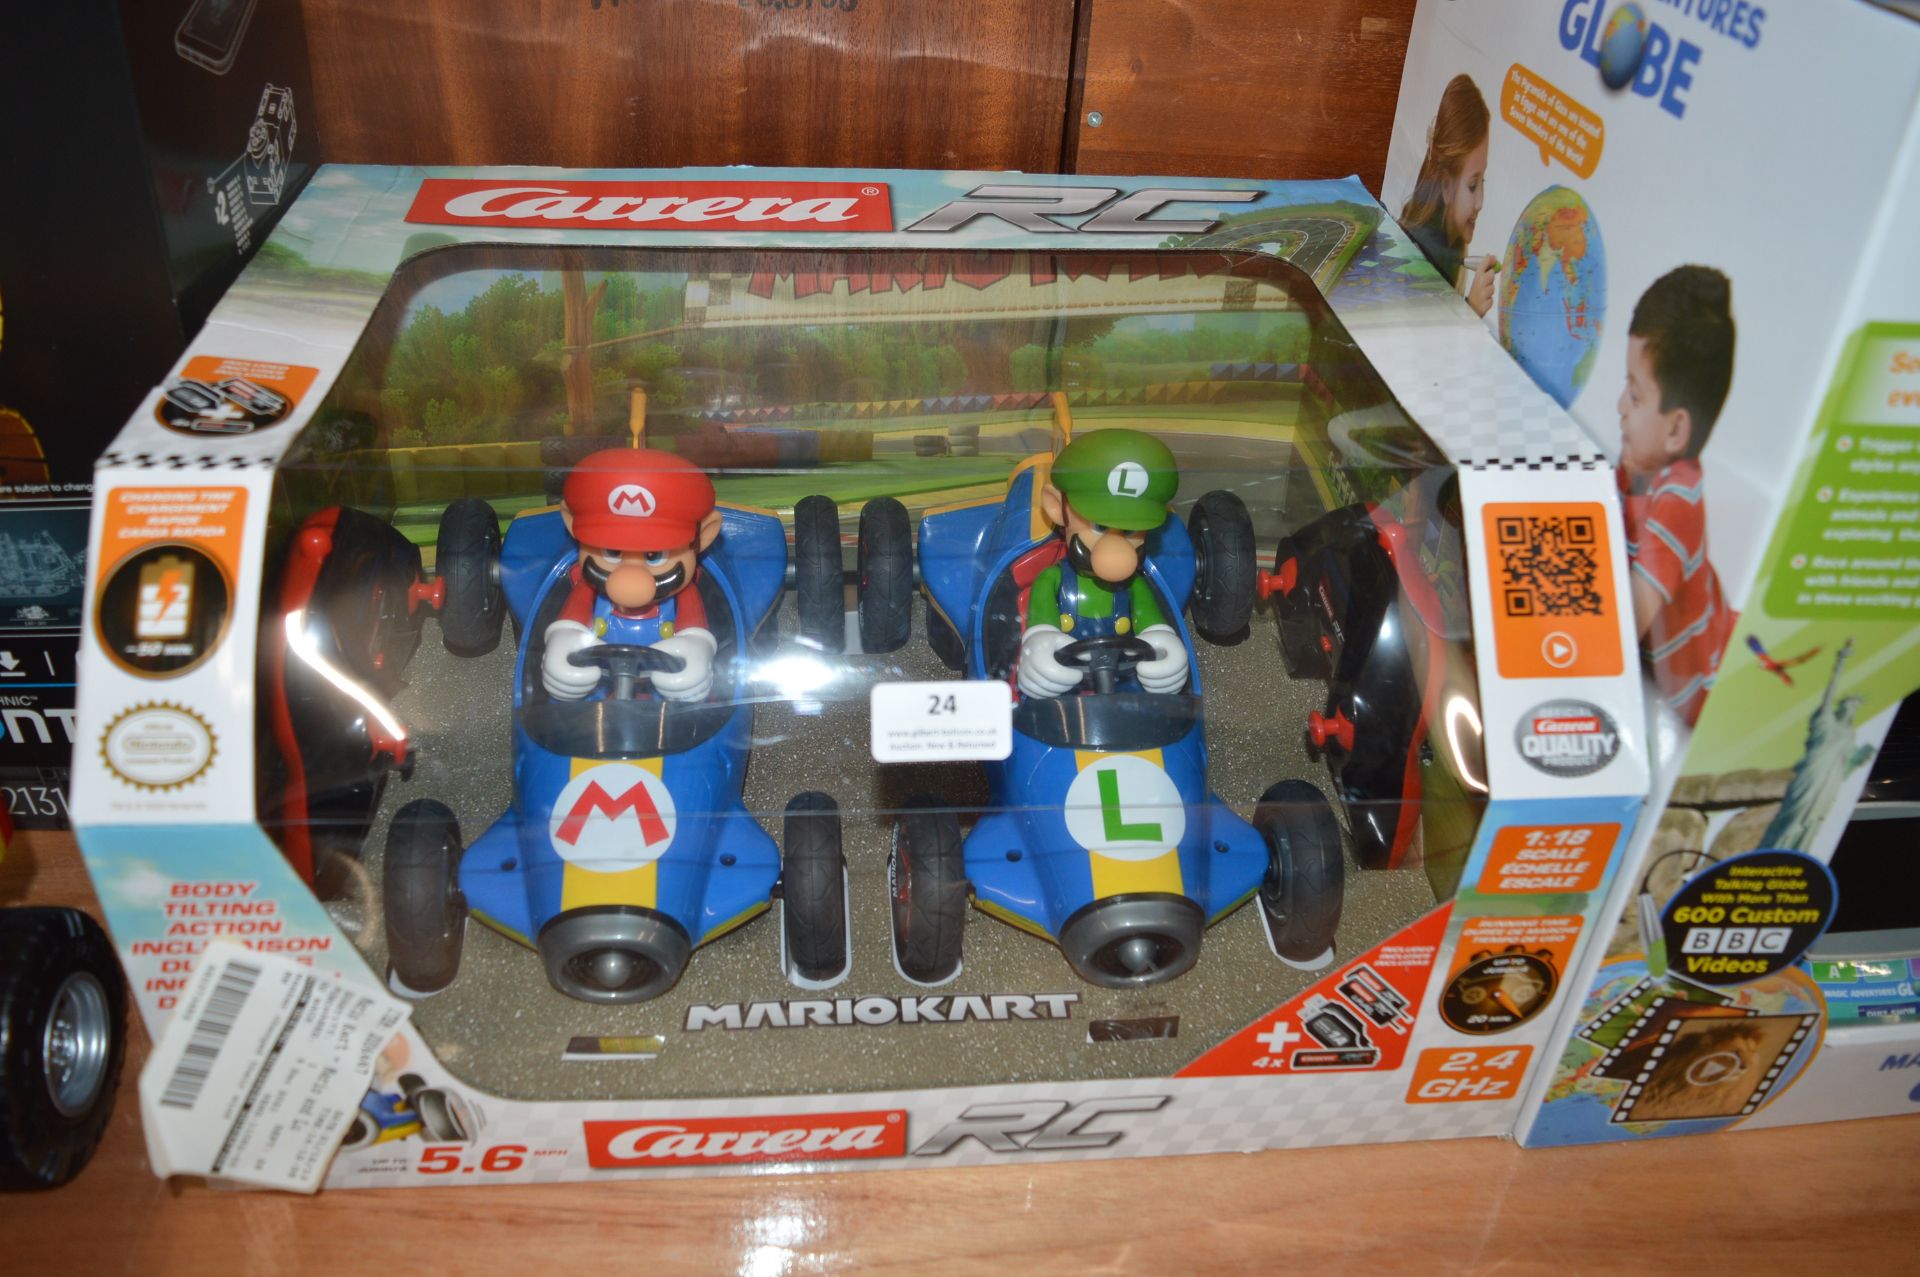 *Carrera Mario Kart RC Car Set